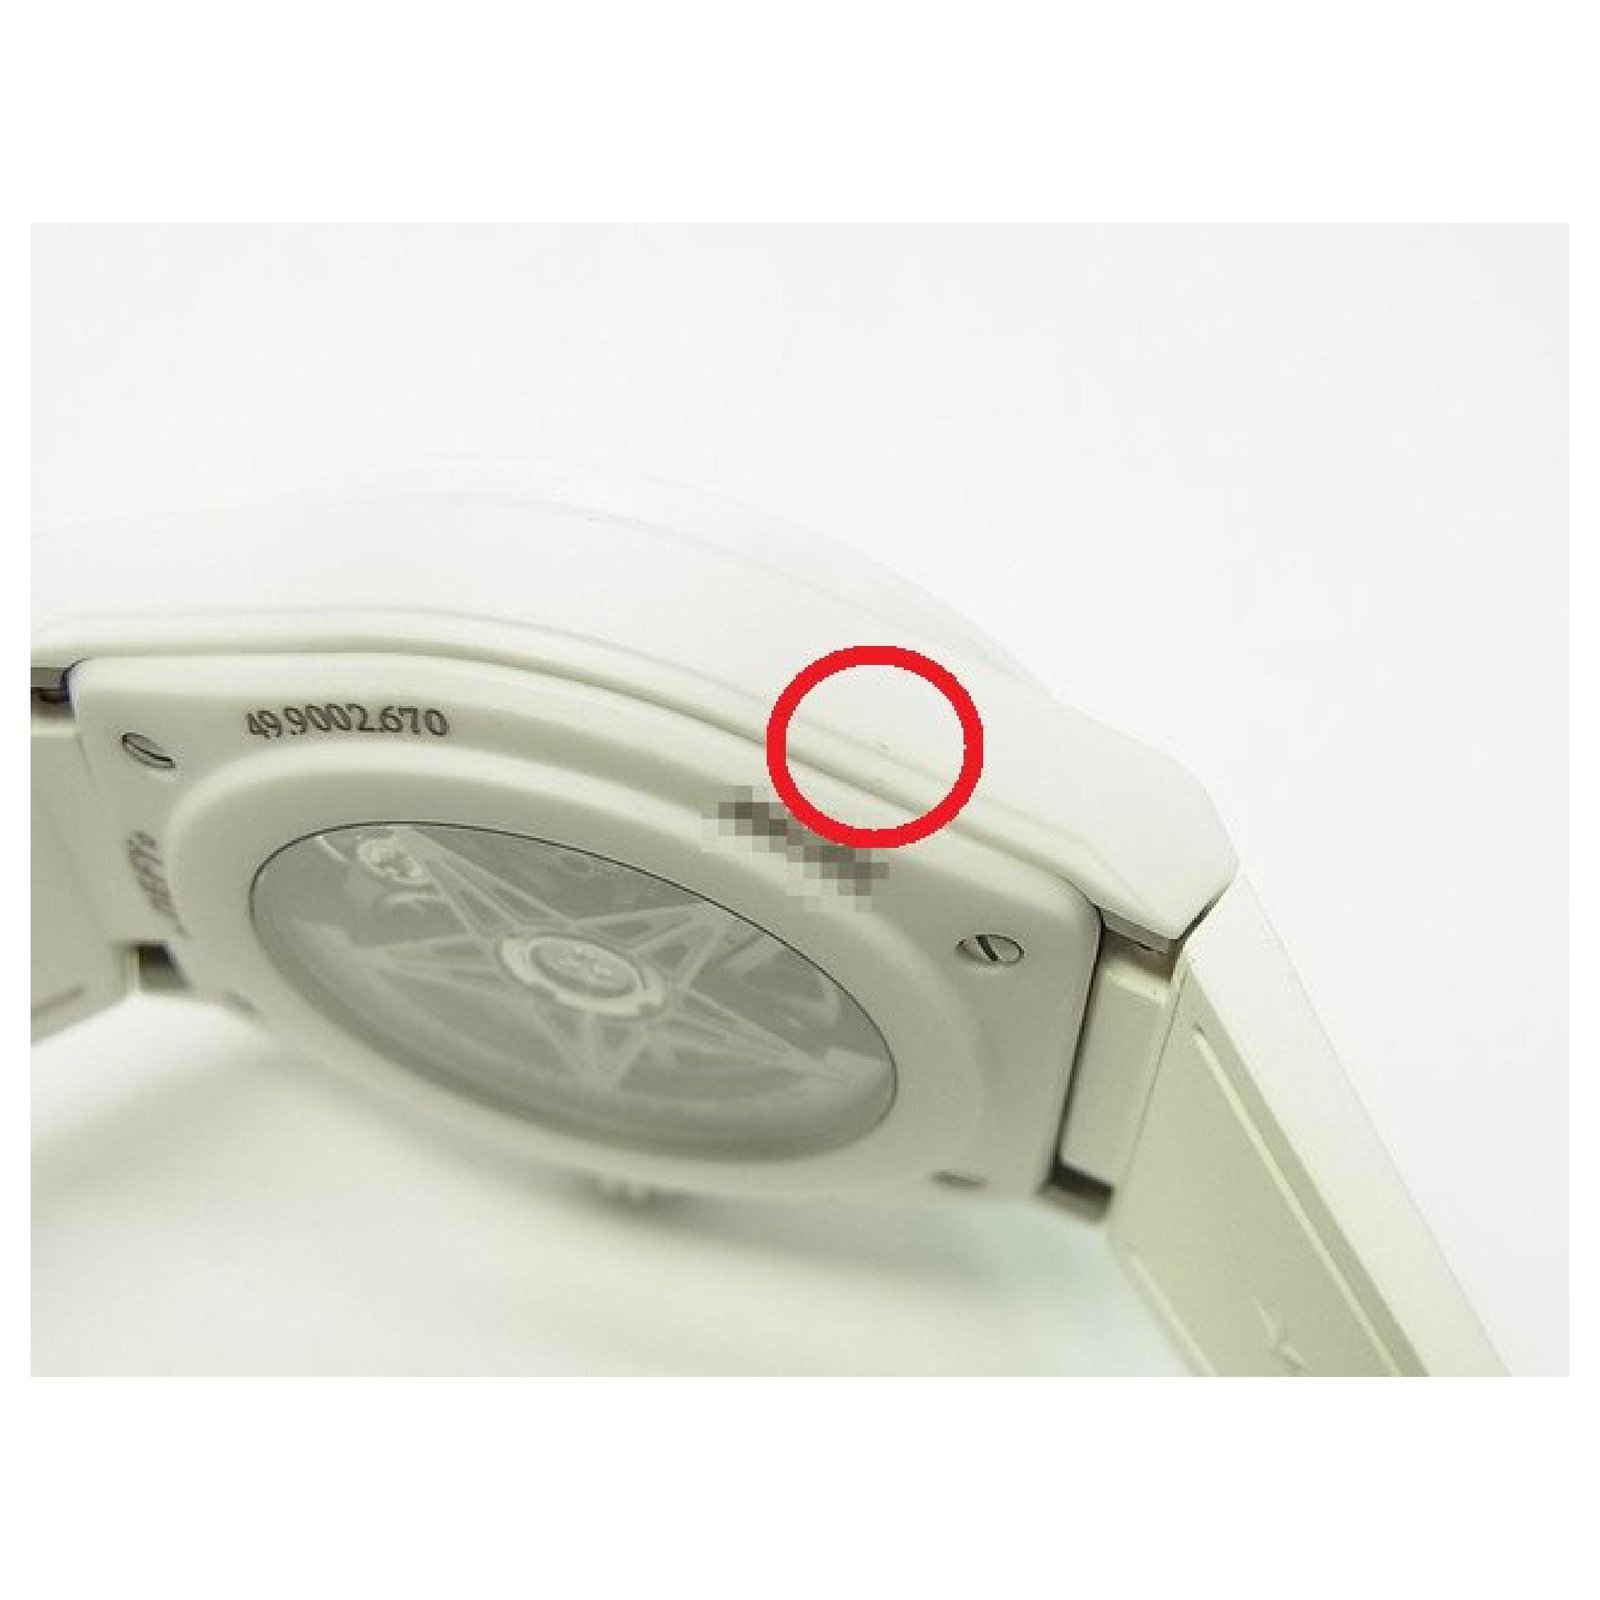 Zenith Defy Classic Automatic Men's Watch 49.9002.670/01.R792